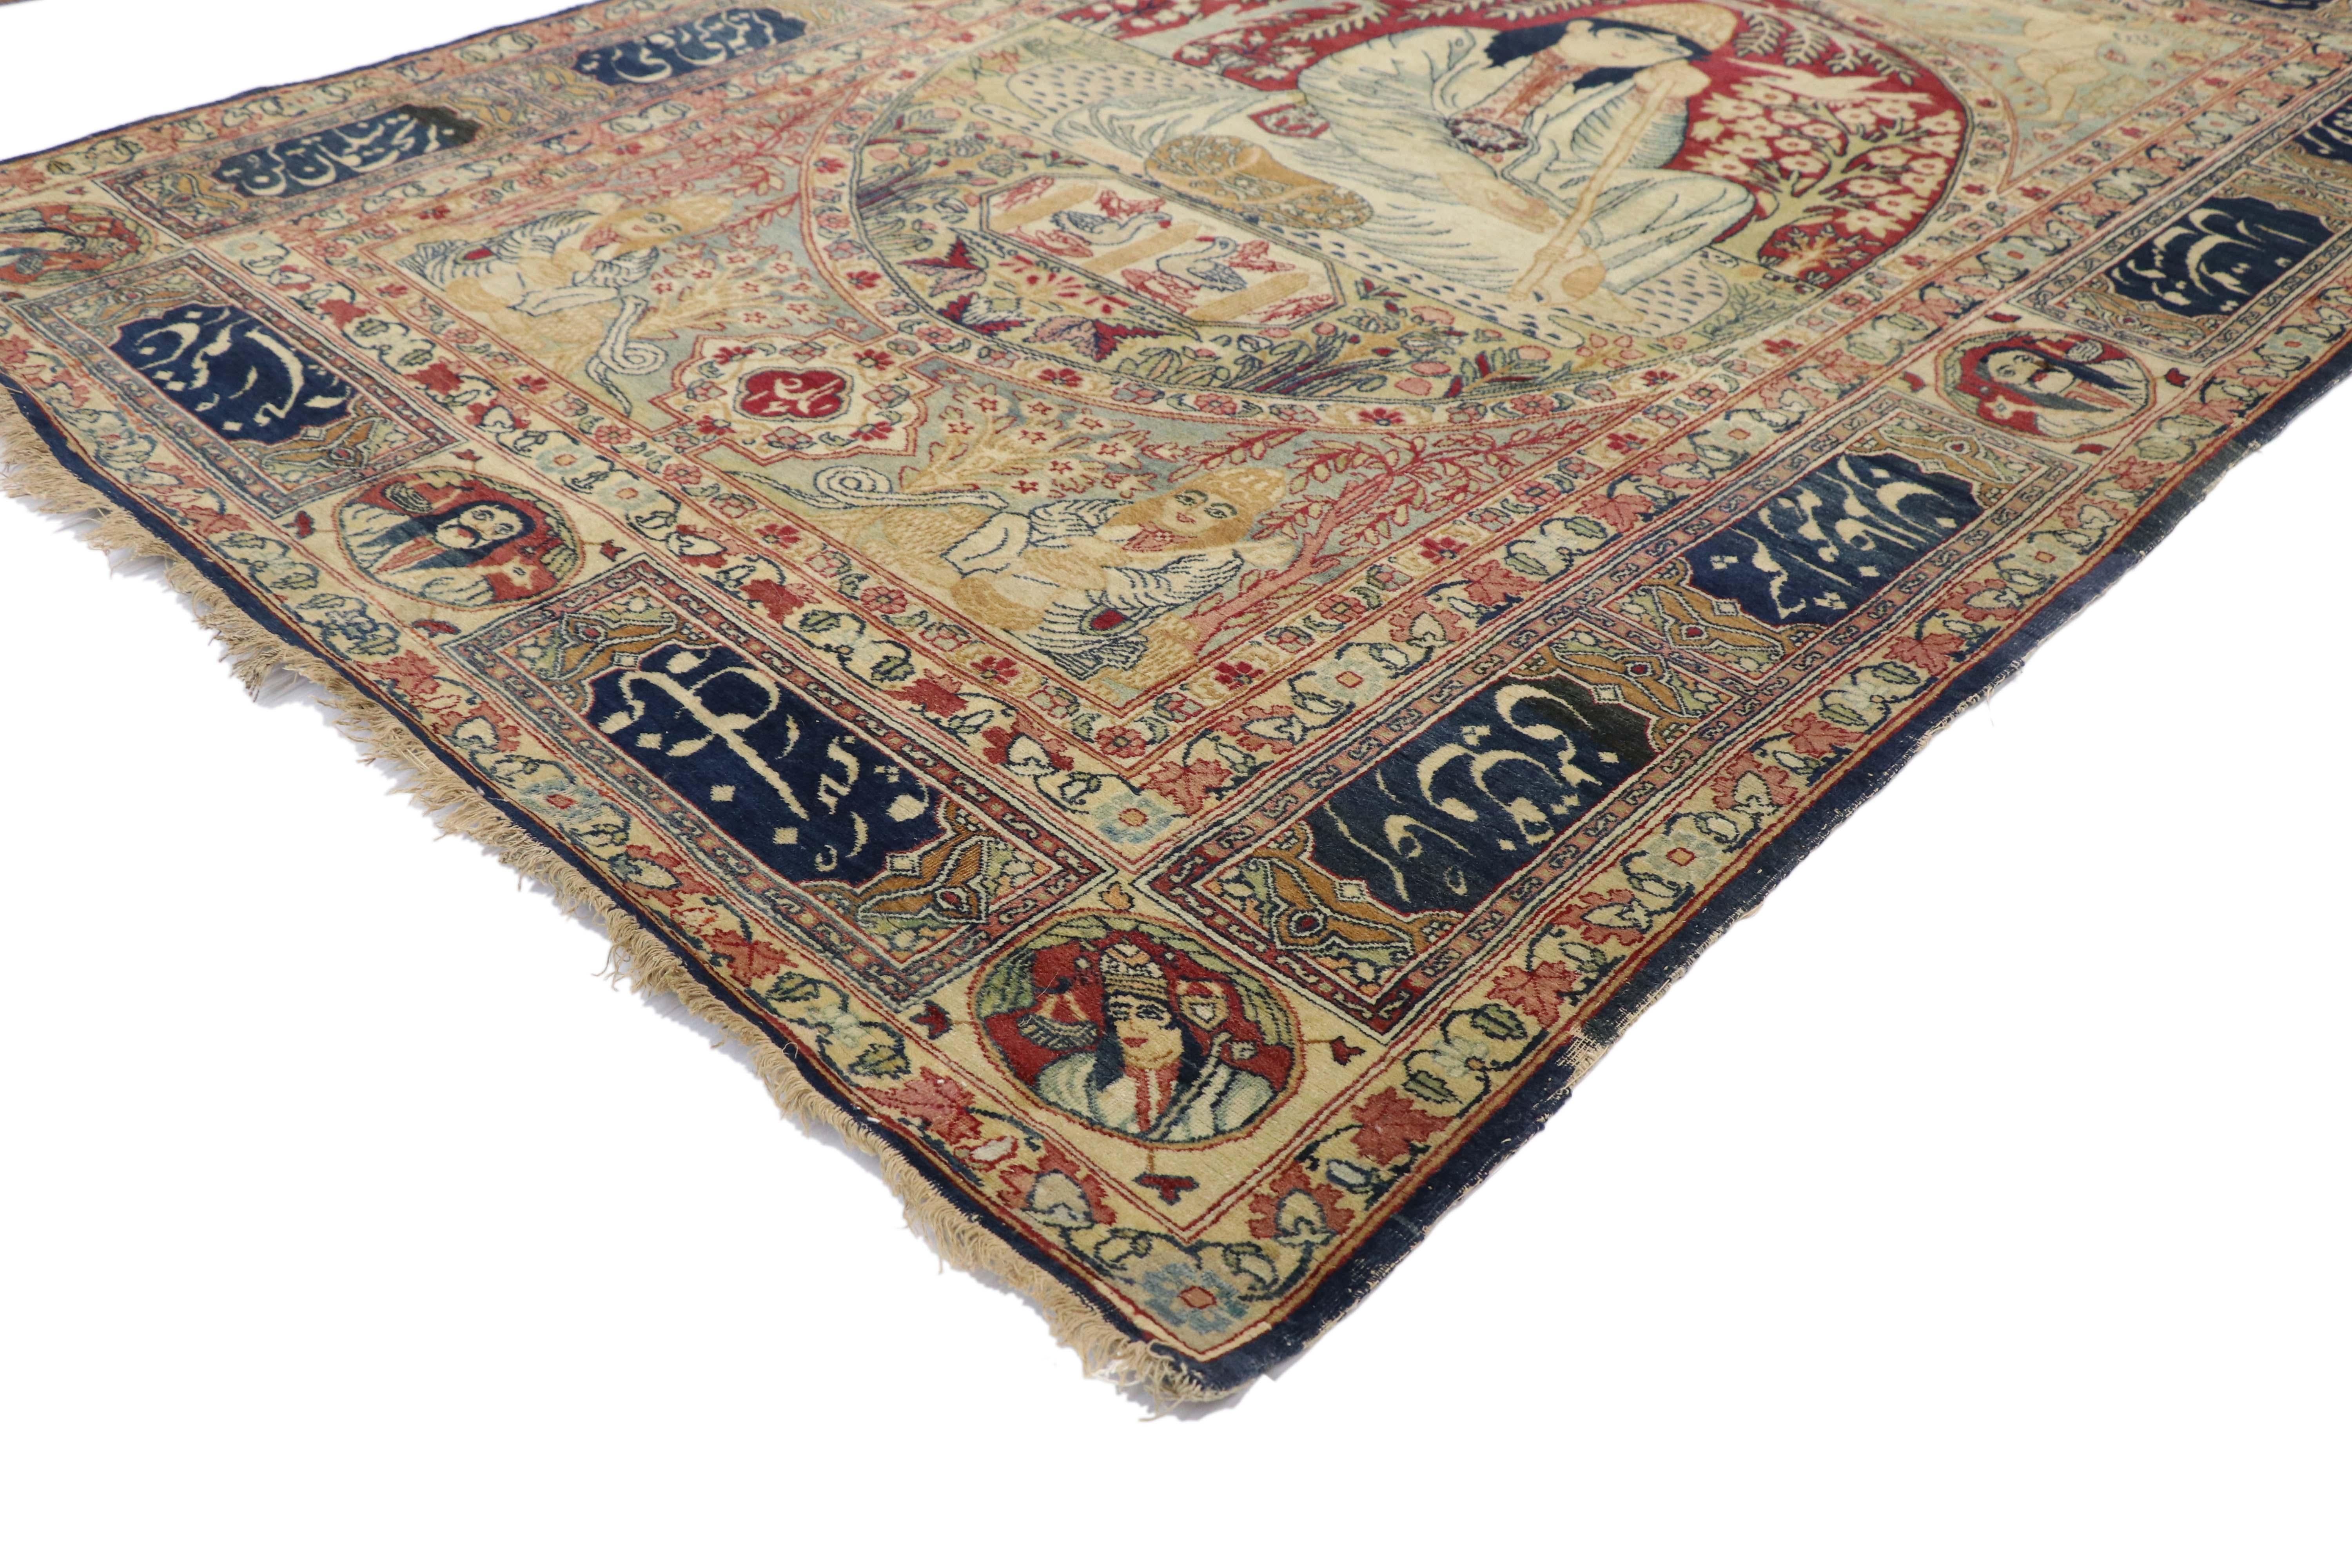 persian rug with cherub imagery